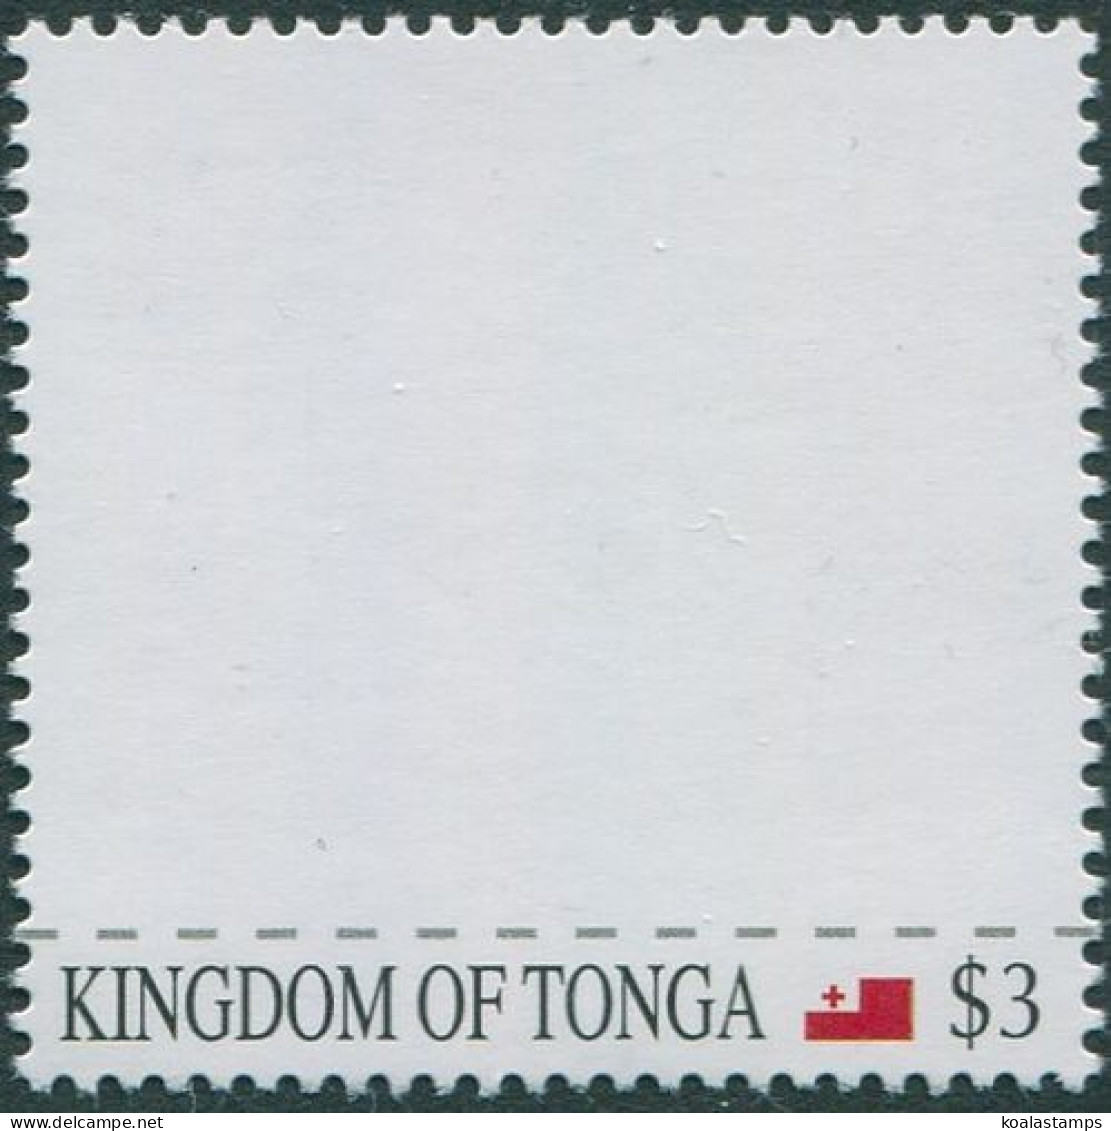 Tonga 2012 SG1656a 3p Blank Personalised Stamp MNH - Tonga (1970-...)